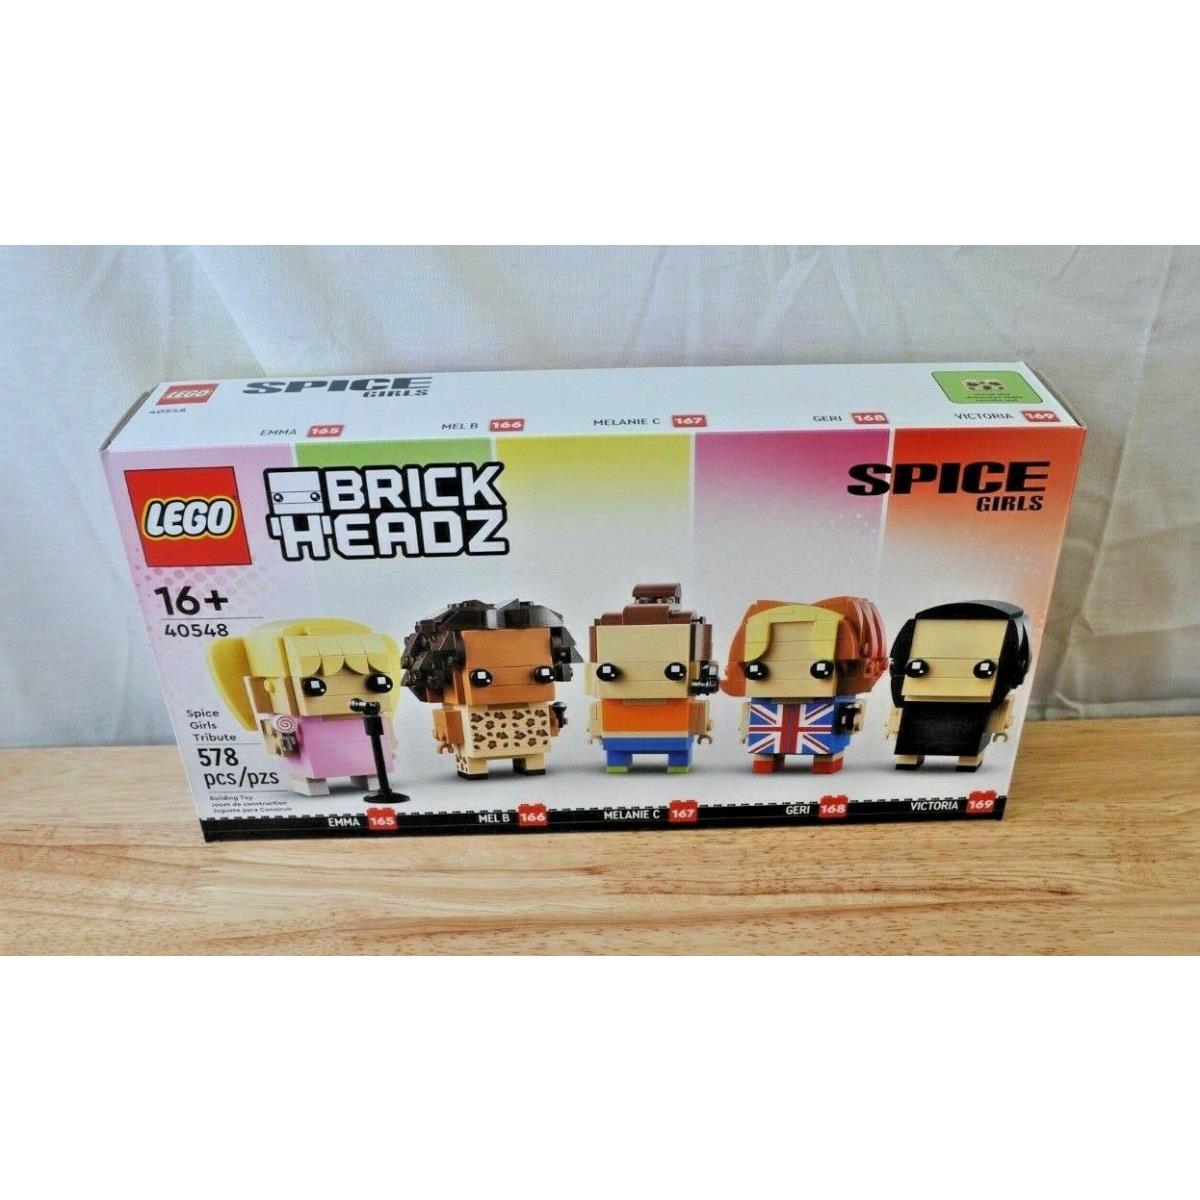 Lego Set 40548 Brick Headz Spice Girls Tribute-emma-mel B-melanie -geri-victoria